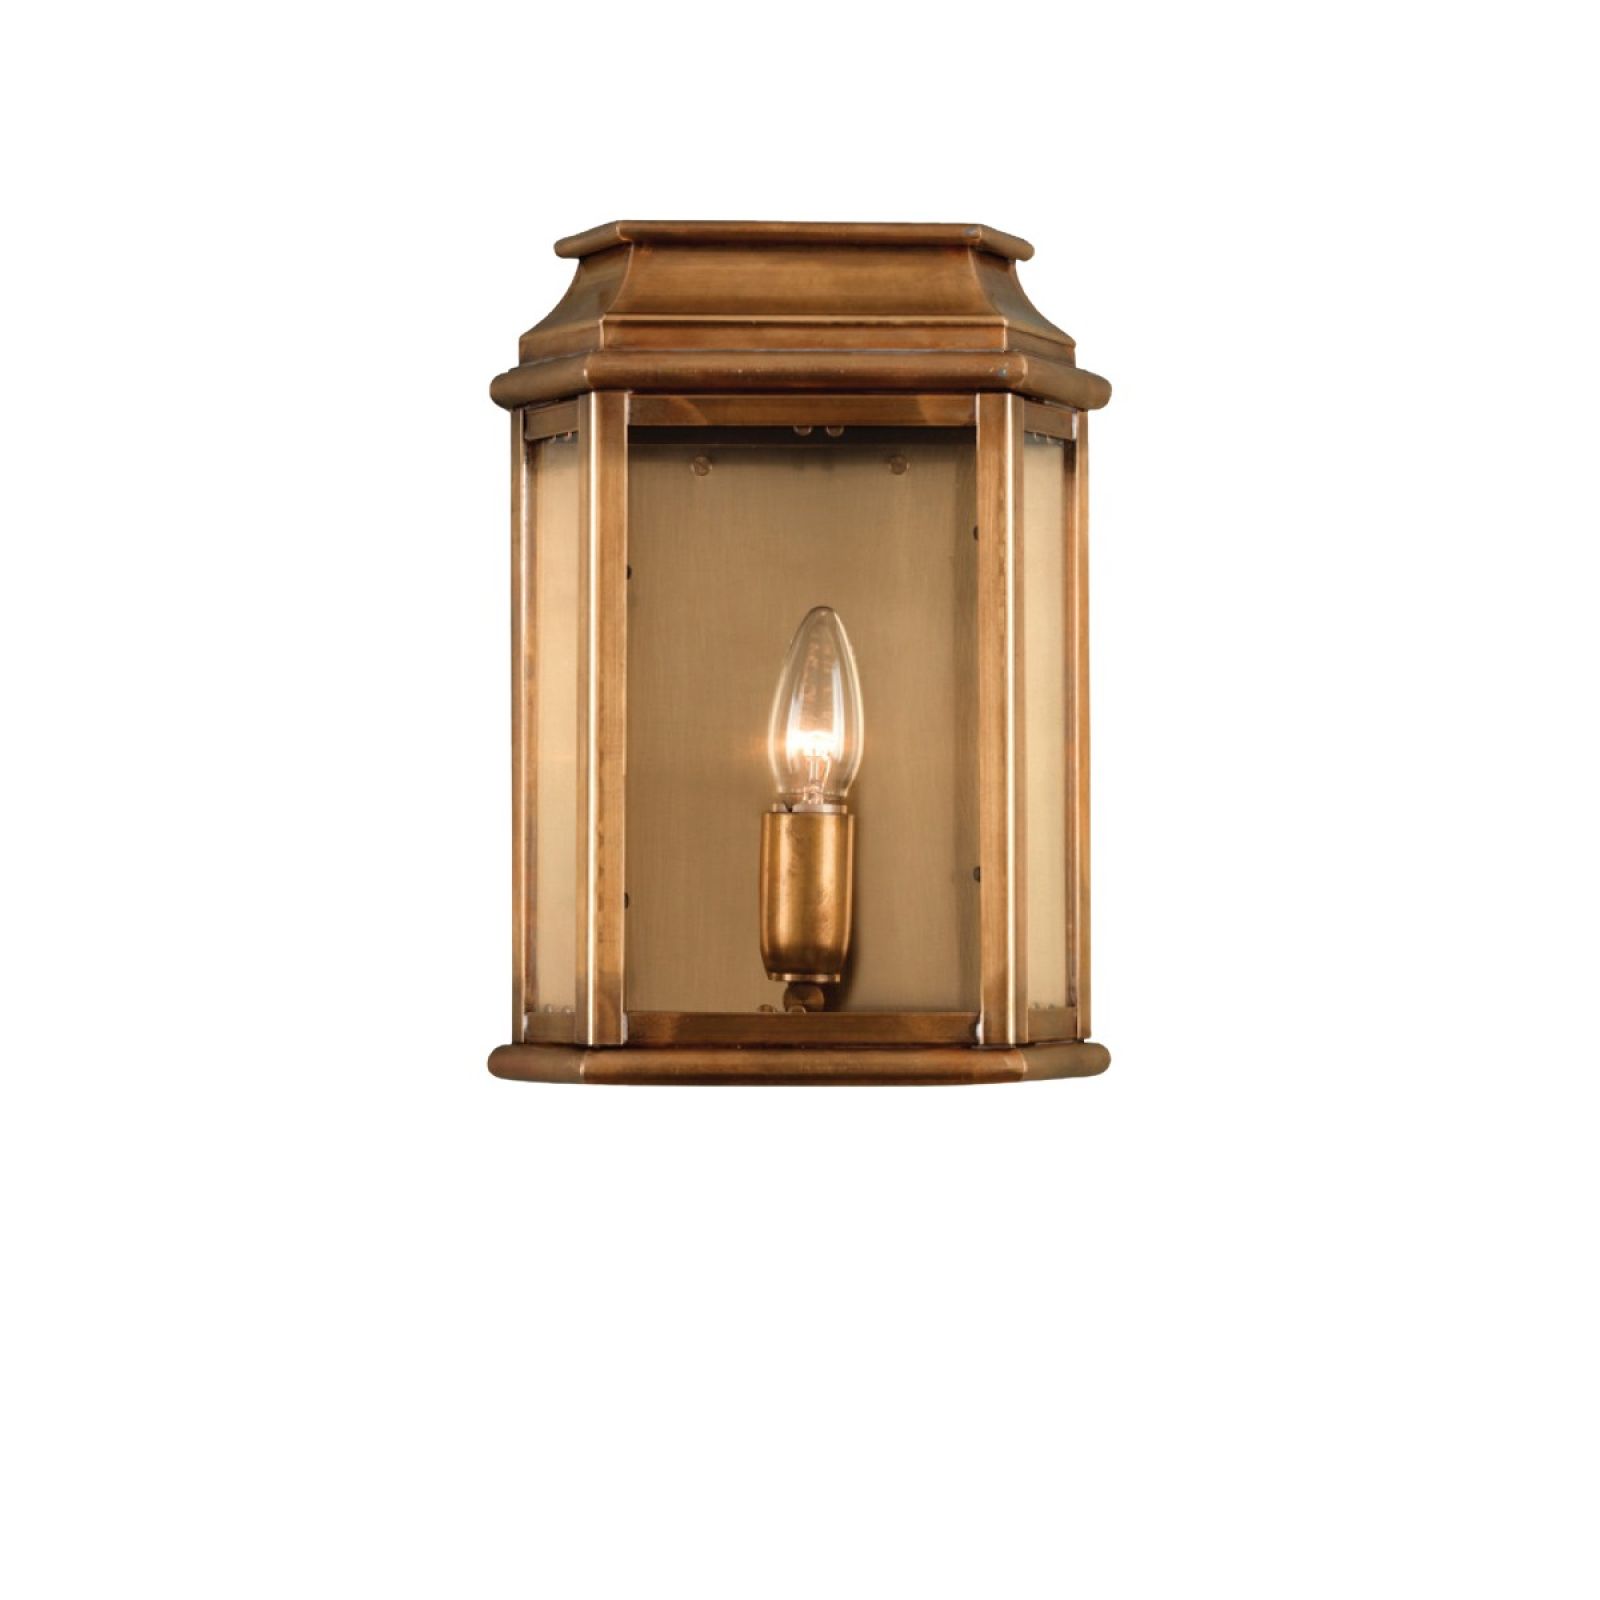 Martins brass wall lantern - antique brass